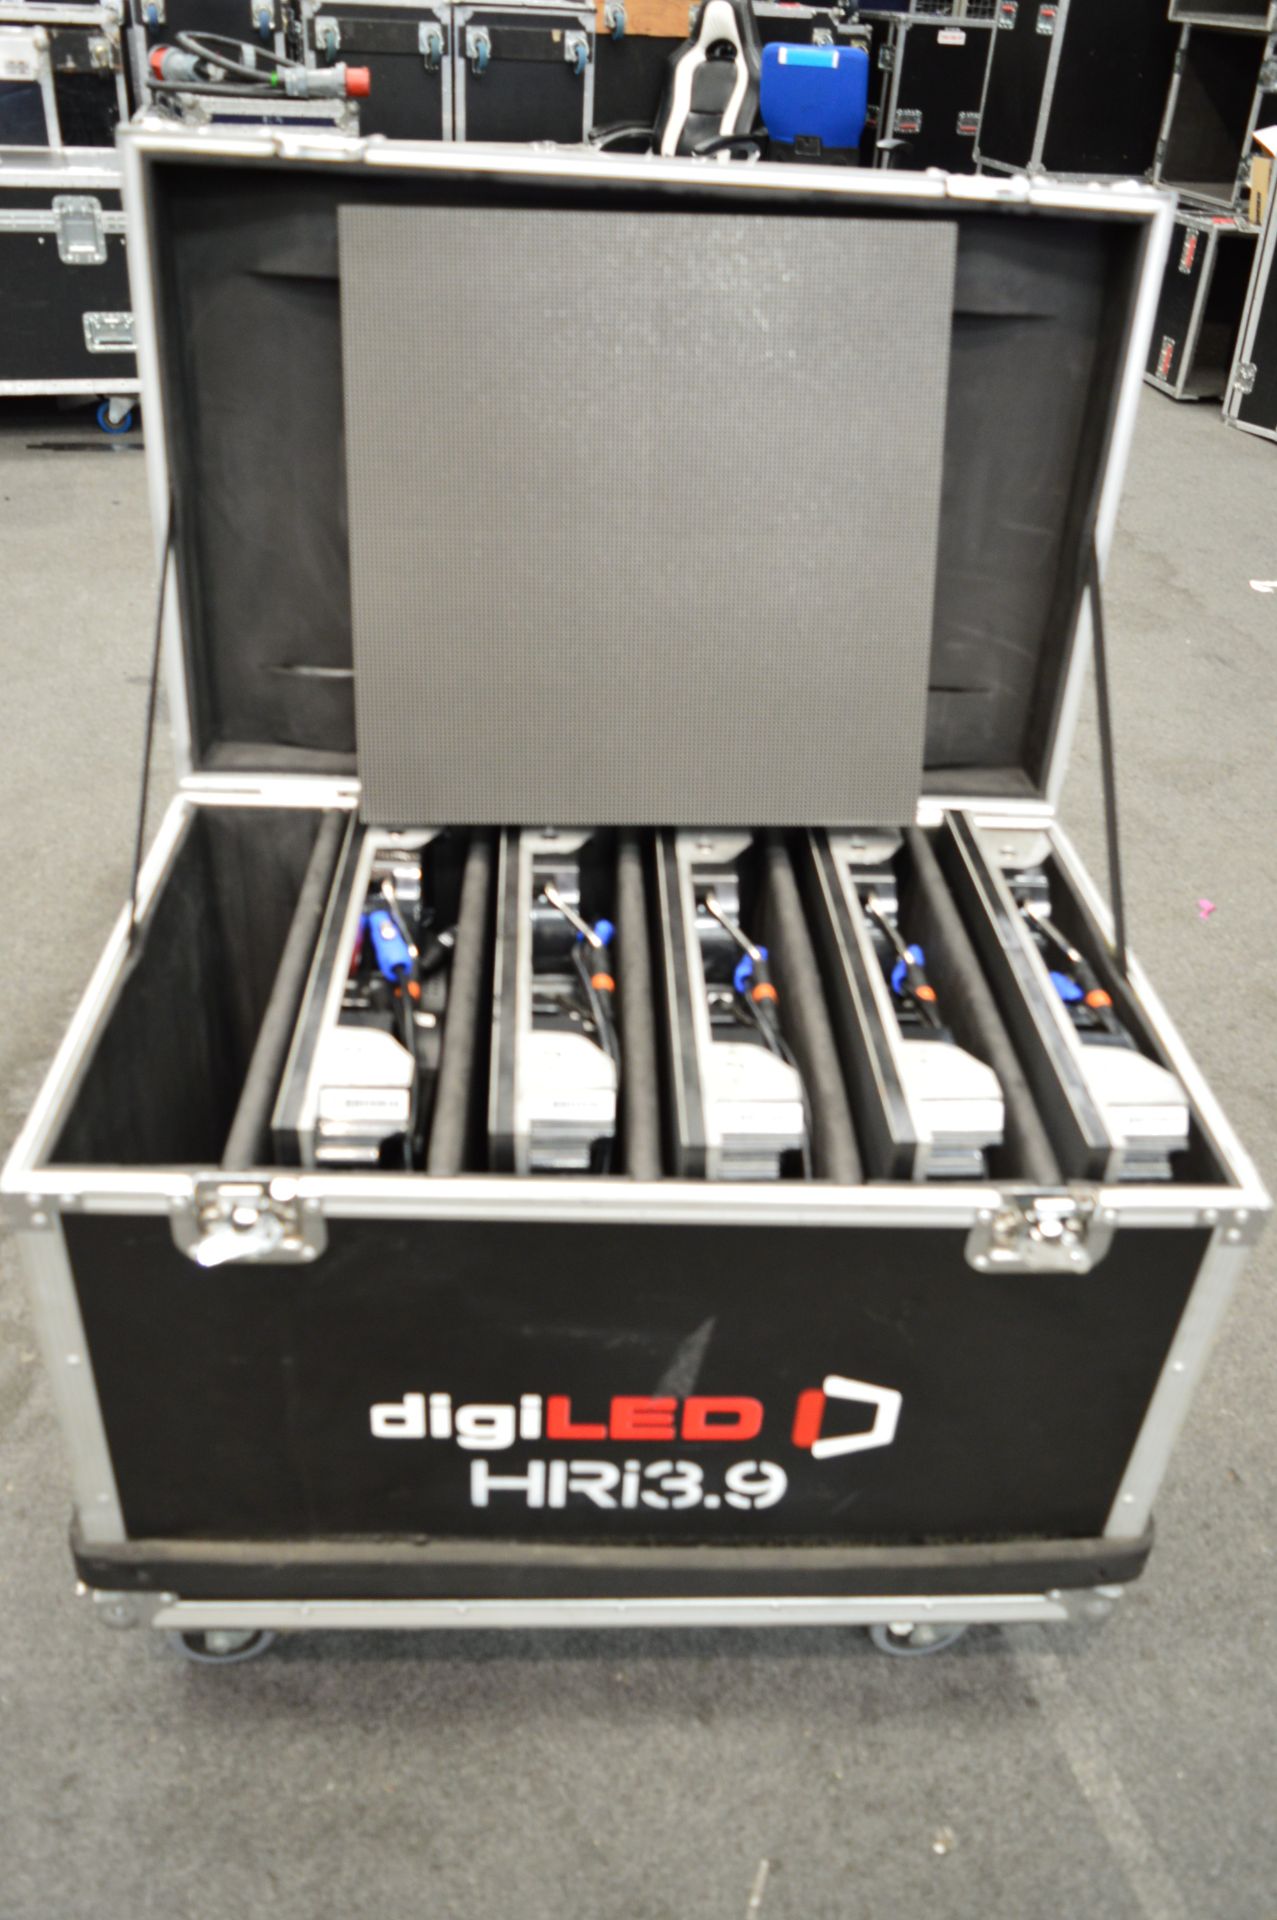 6x No. DigiLED 3.9mm LED panels, Model HRi3900, si - Image 3 of 6